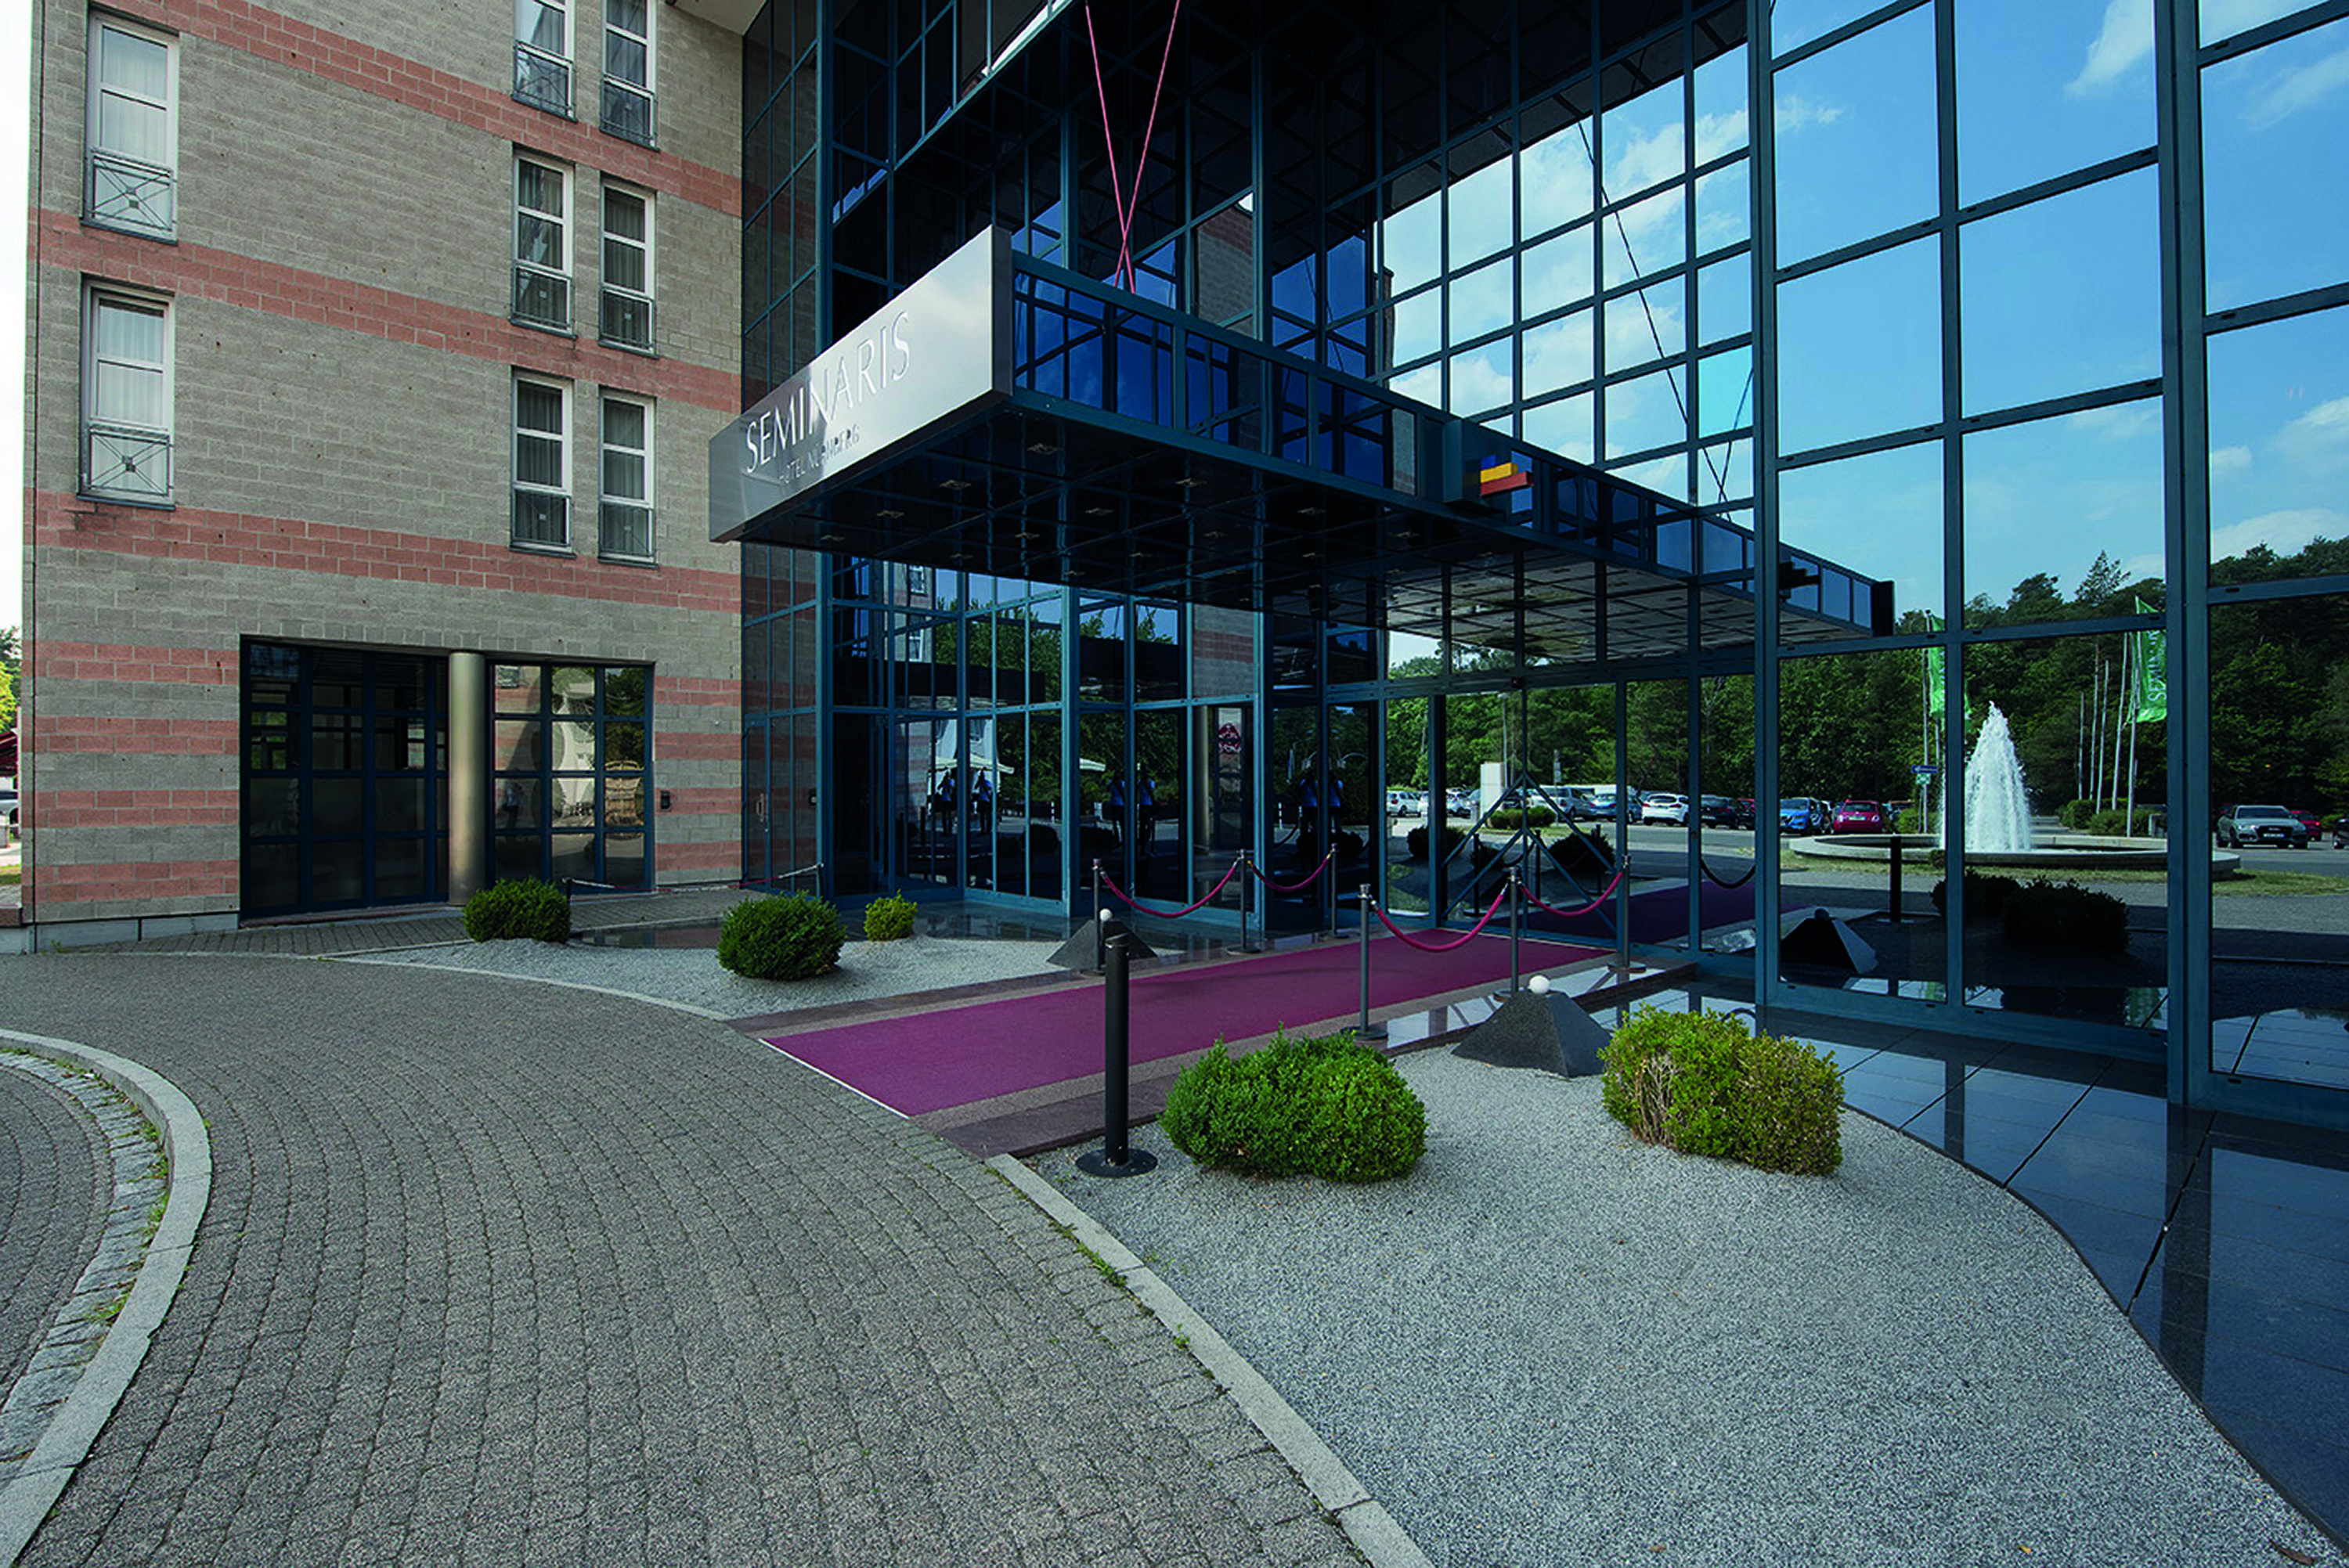 Seminaris Hotel Nürnberg <br/>59.00 ew <br/> <a href='http://vakantieoplossing.nl/outpage/?id=fedb8516671b2644f7656039415f449e' target='_blank'>View Details</a>